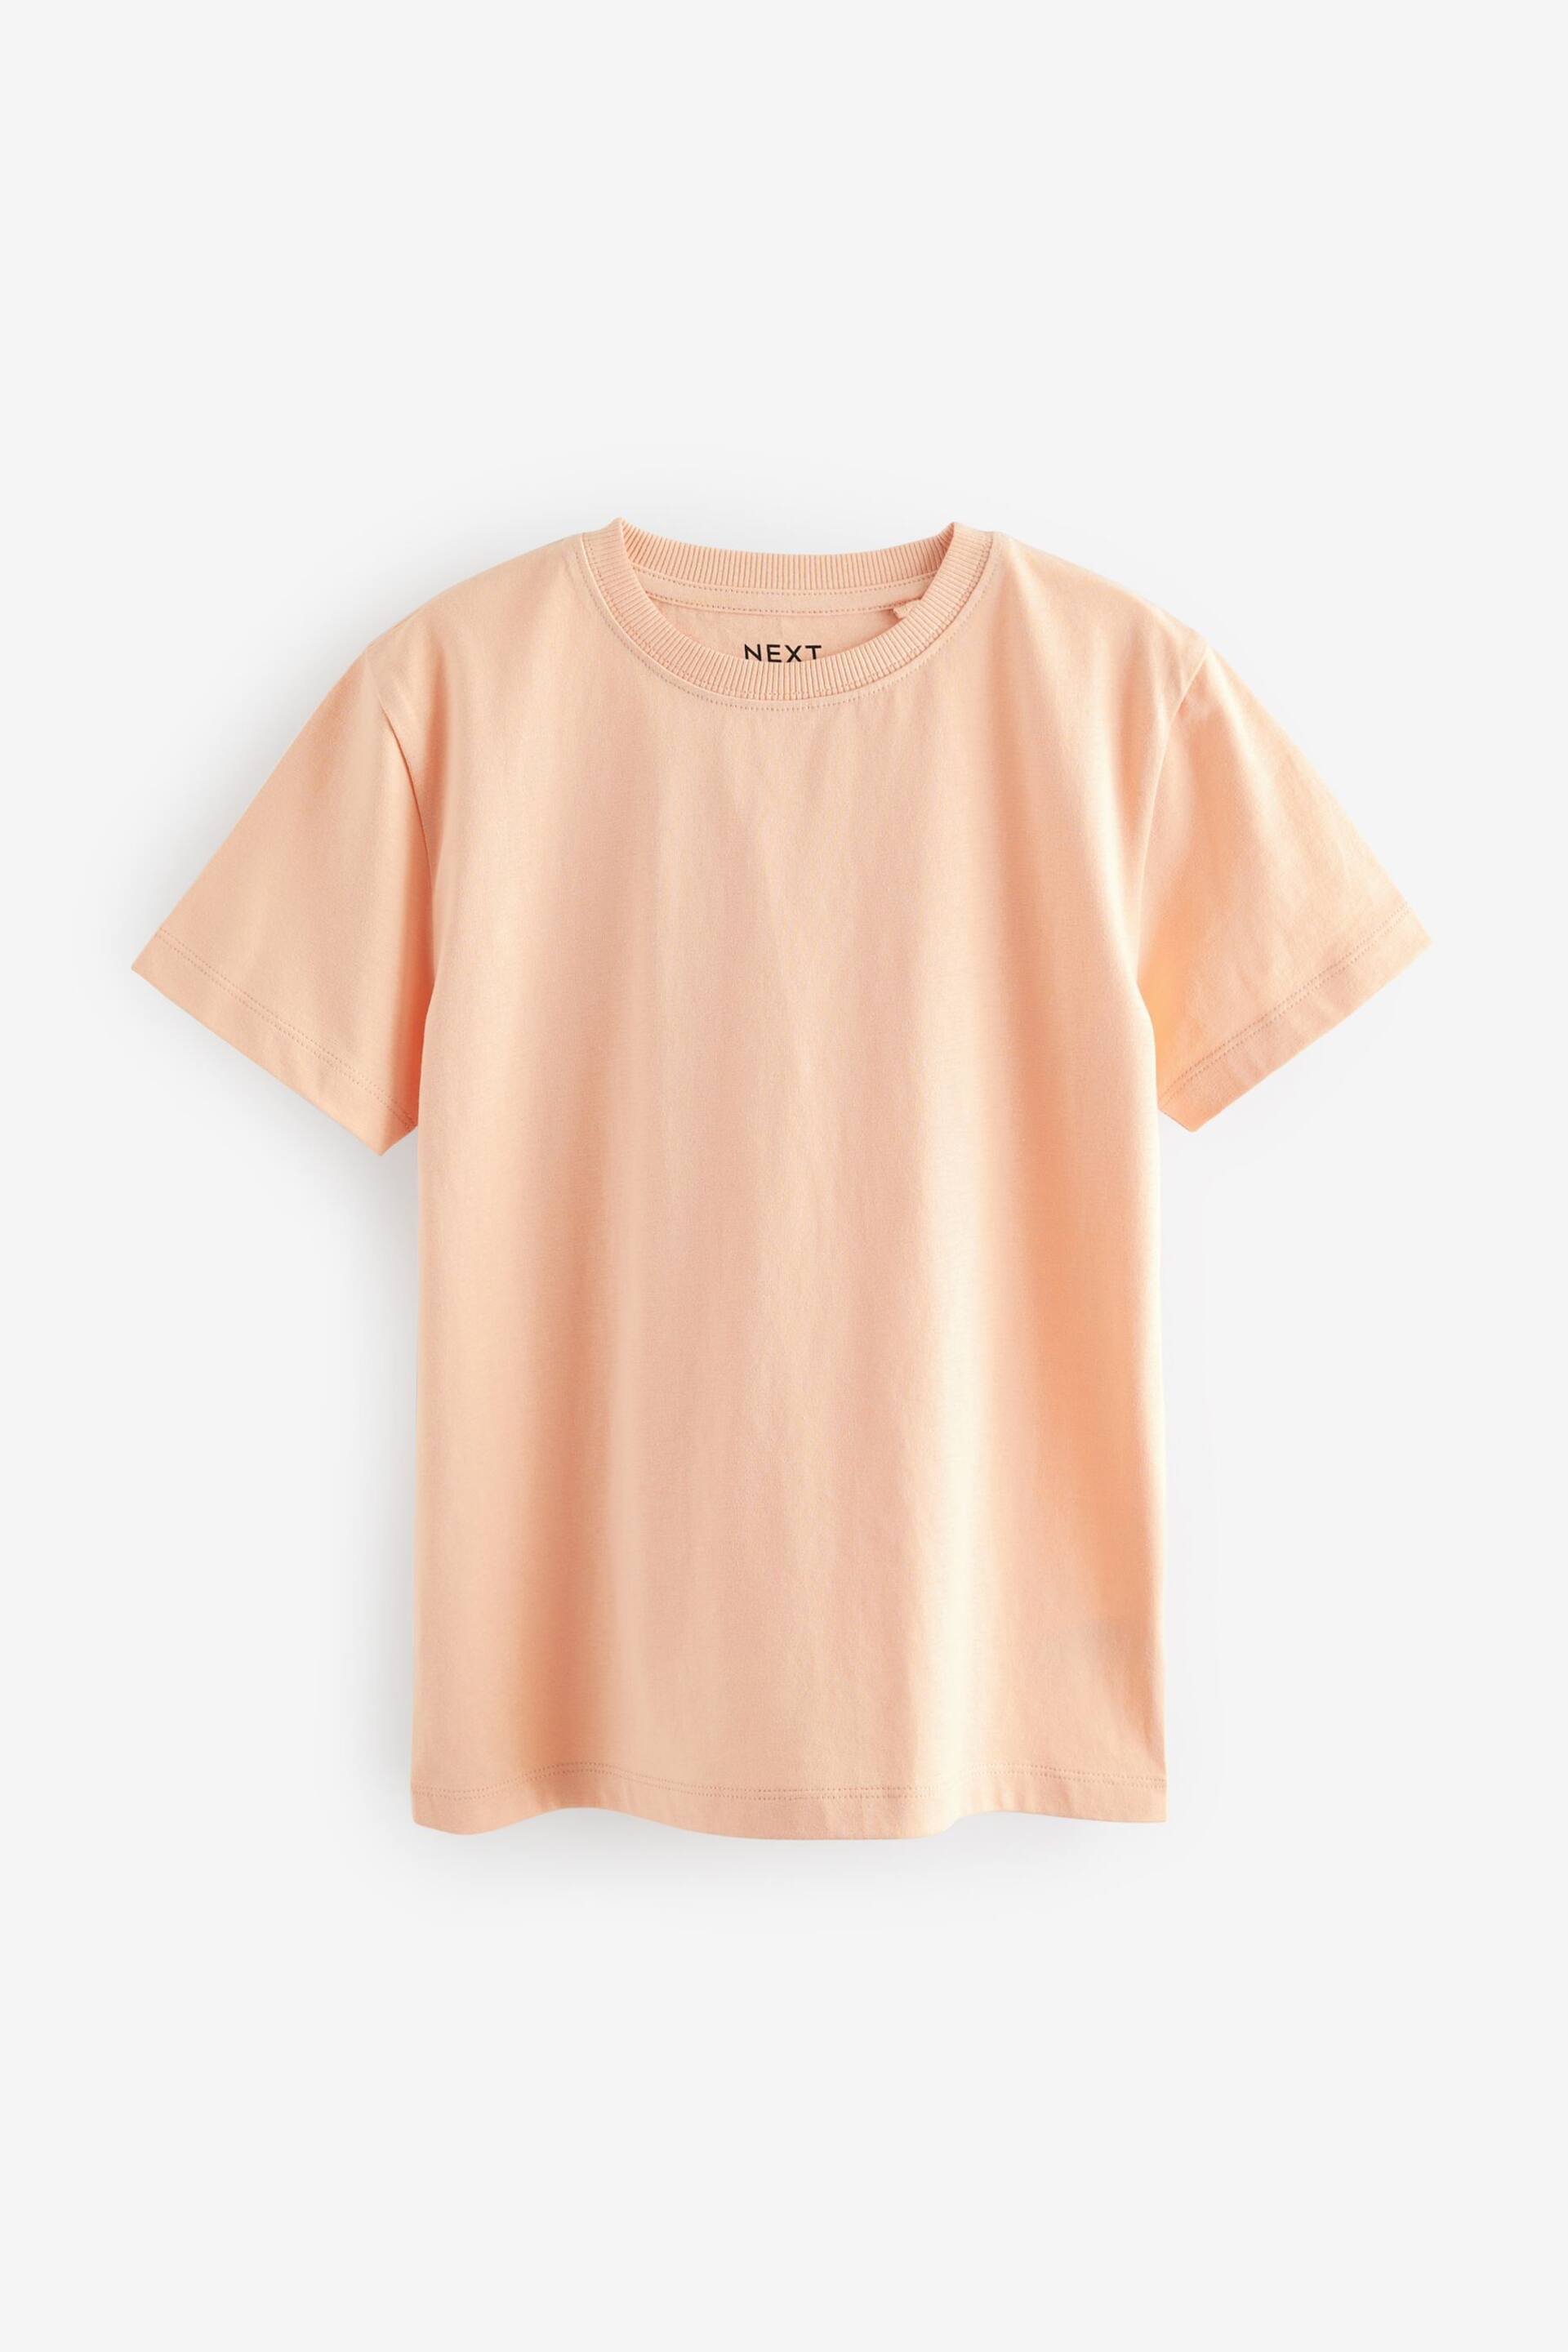 Orange Peach Cotton Short Sleeve T-Shirt (3-16yrs) - Image 1 of 3